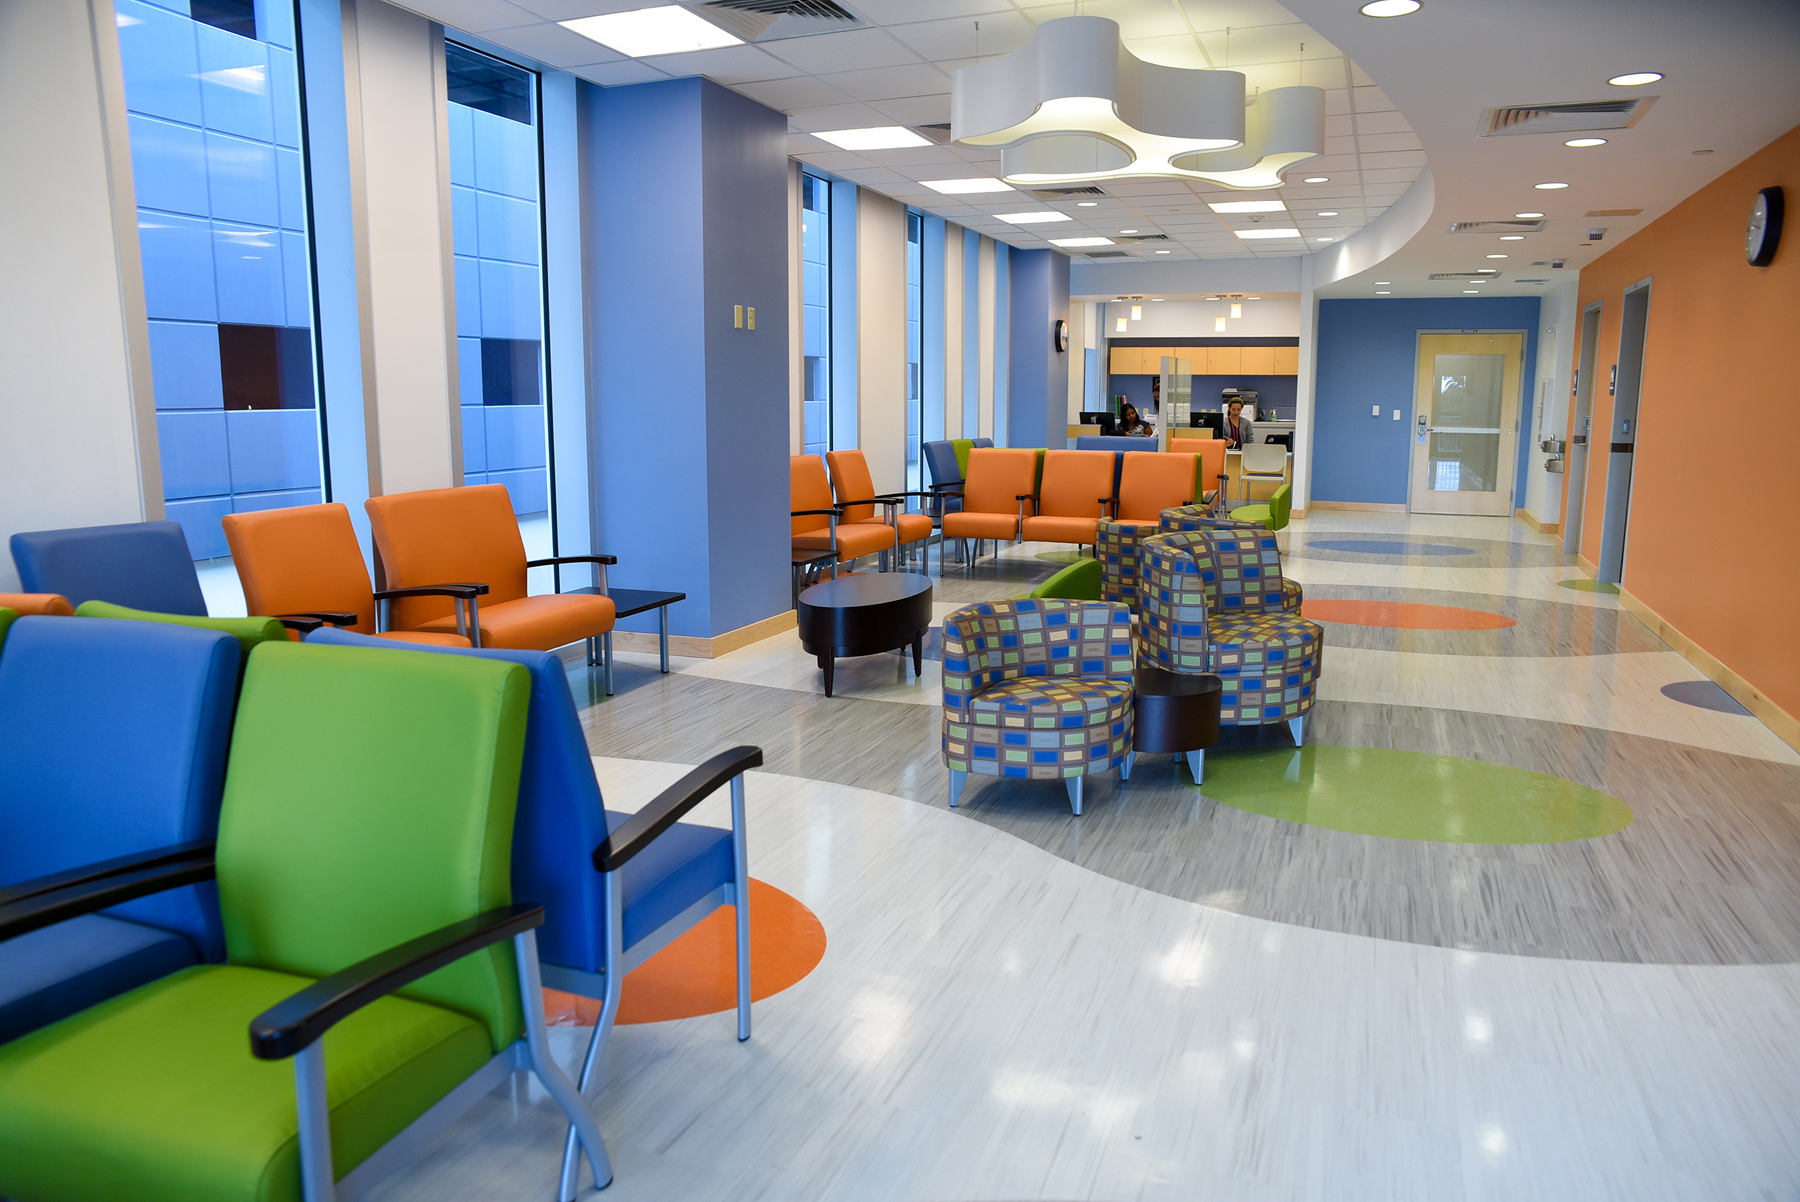 Lobby of the Miami Children's Hospital Ambulatory Surgery Center.